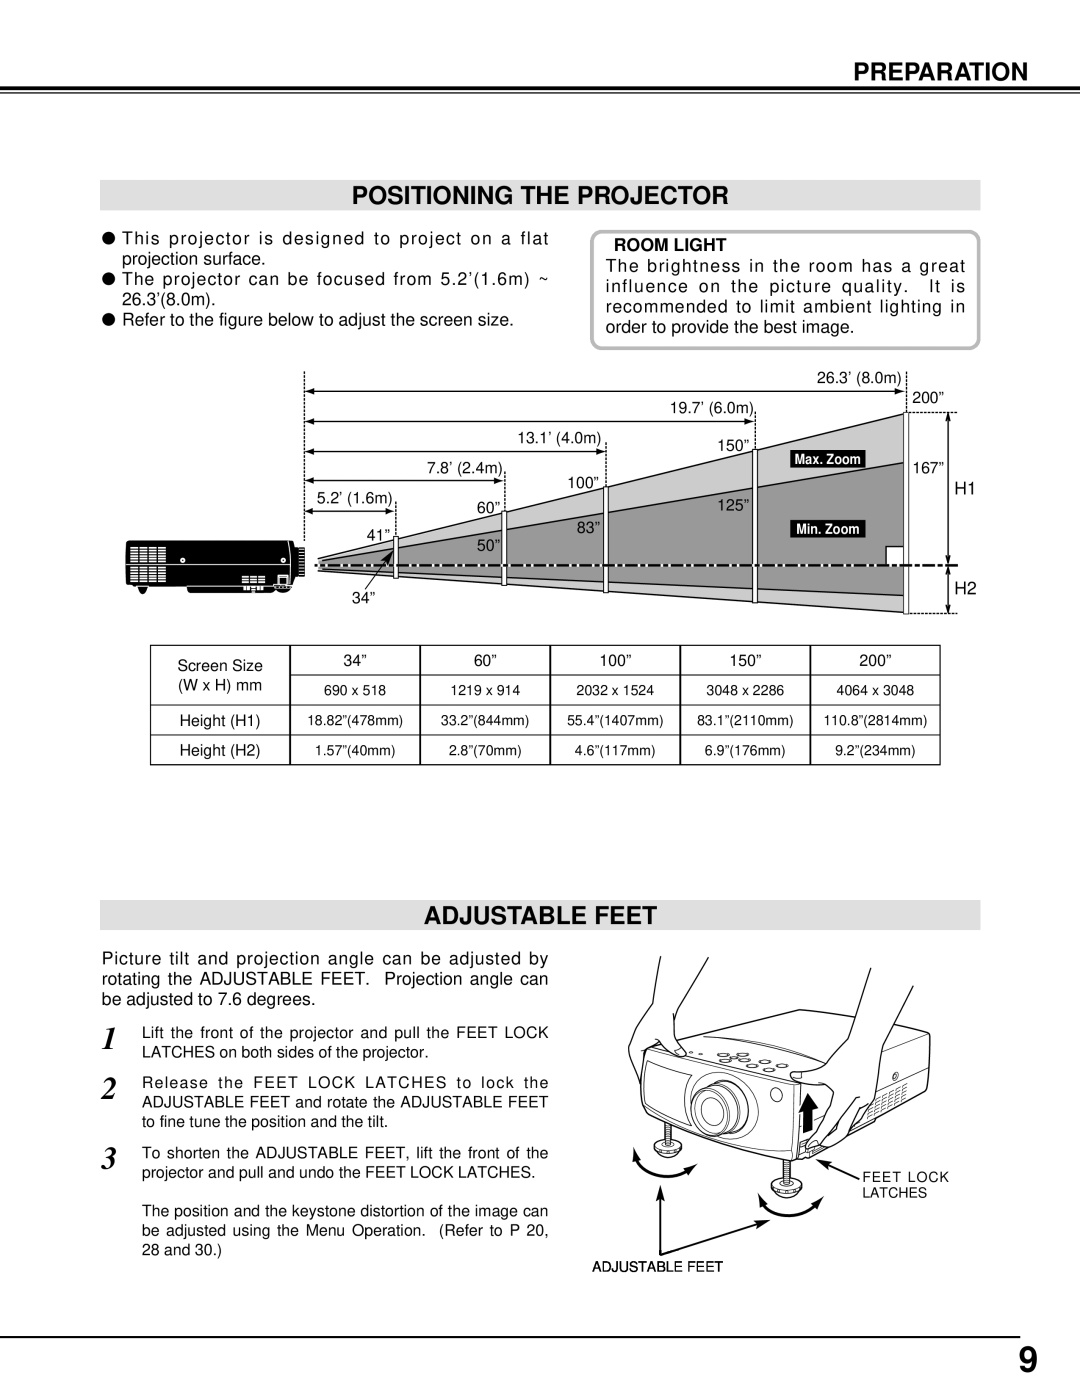 BOXLIGHT XP-5t manual Preparation Positioning The Projector, Adjustable Feet, Room Light 